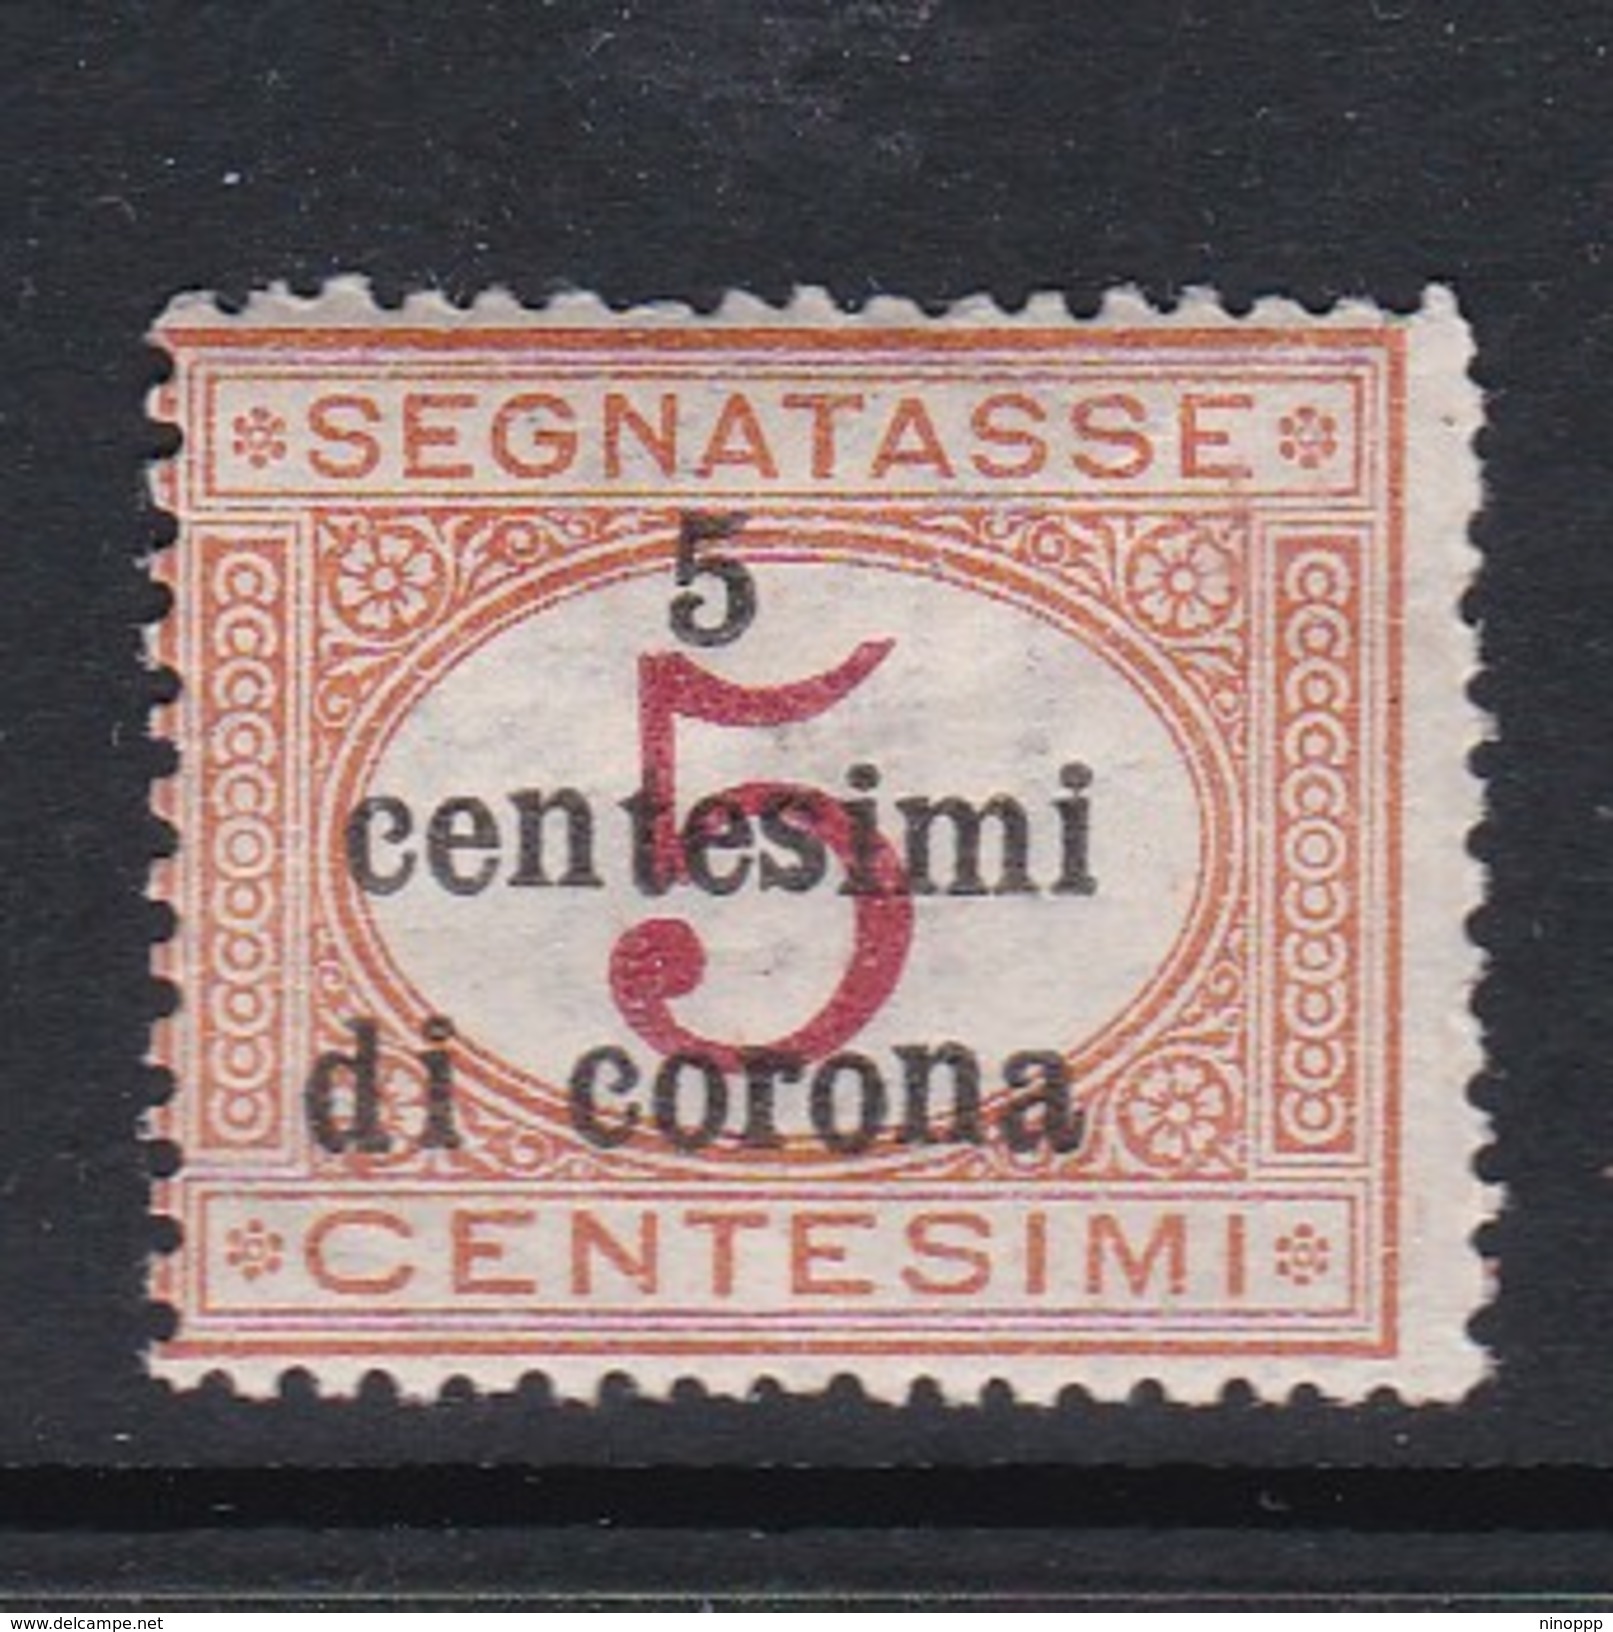 Venezia Giulia NJ8 1919 Italian Stamps Overprinted5c On 5c Buff And Magenta Mint Never Hinged - Austrian Occupation